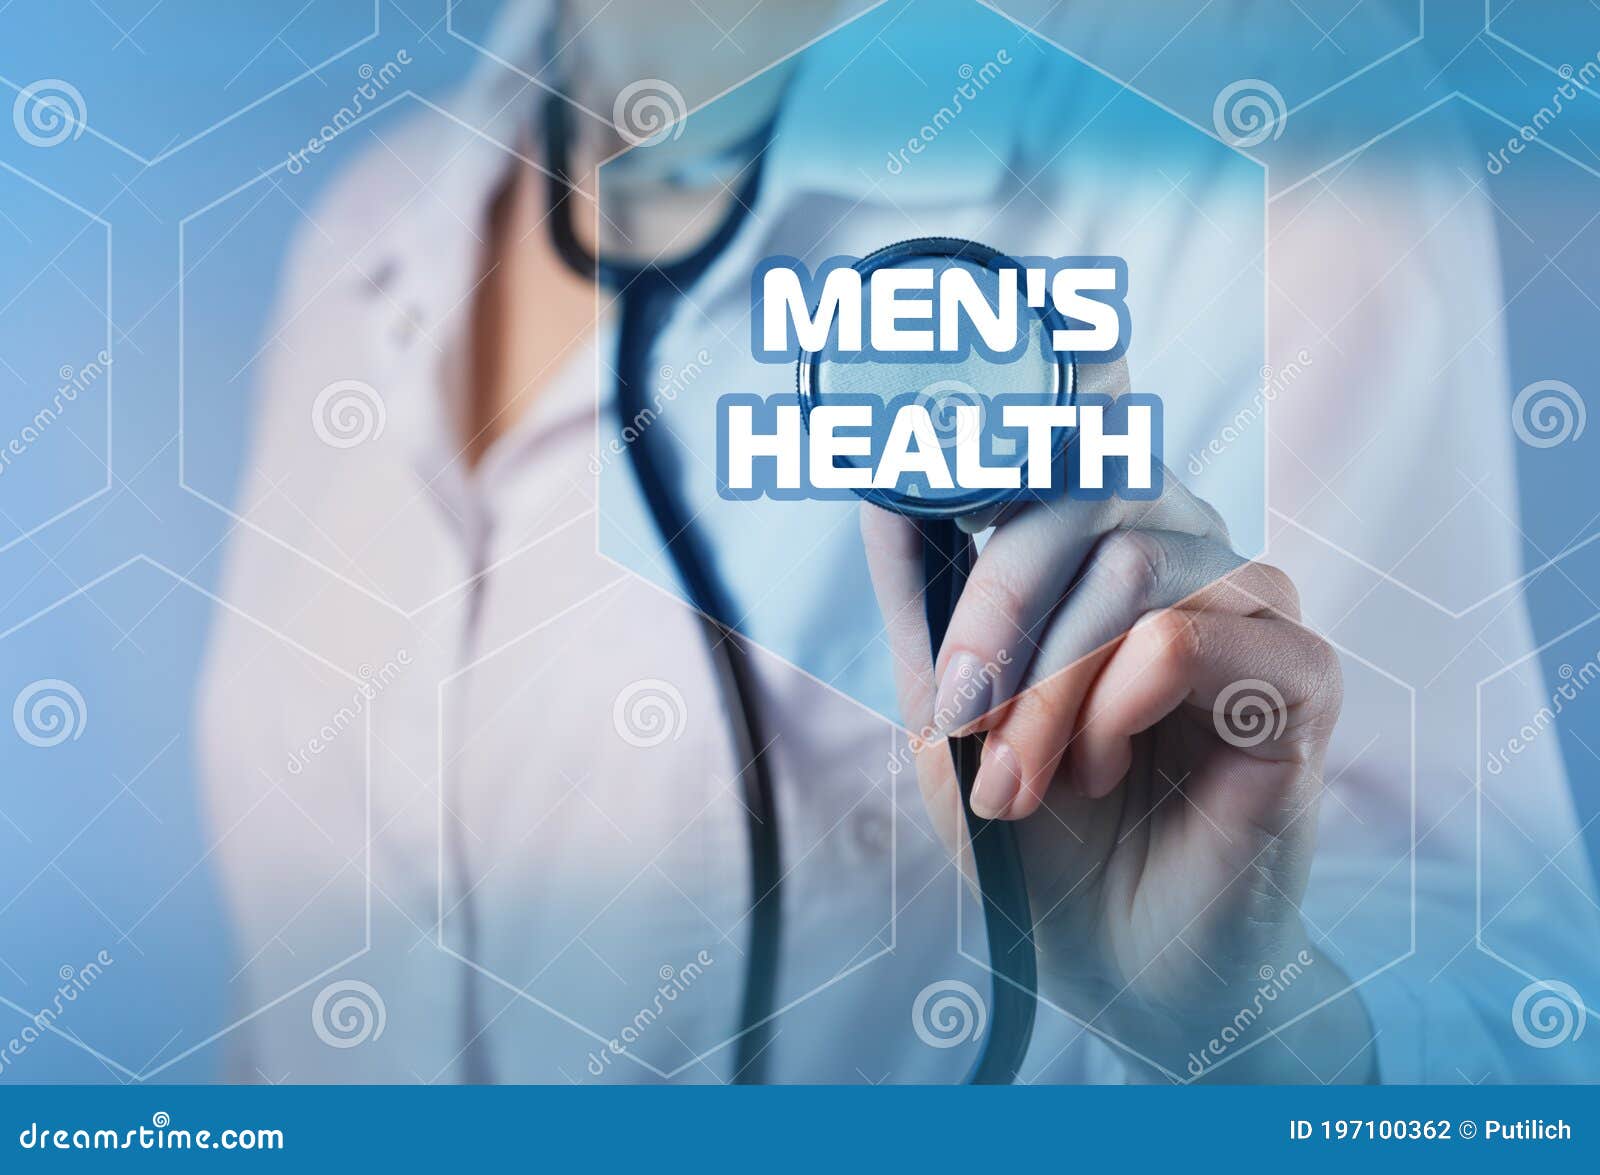 mens health care